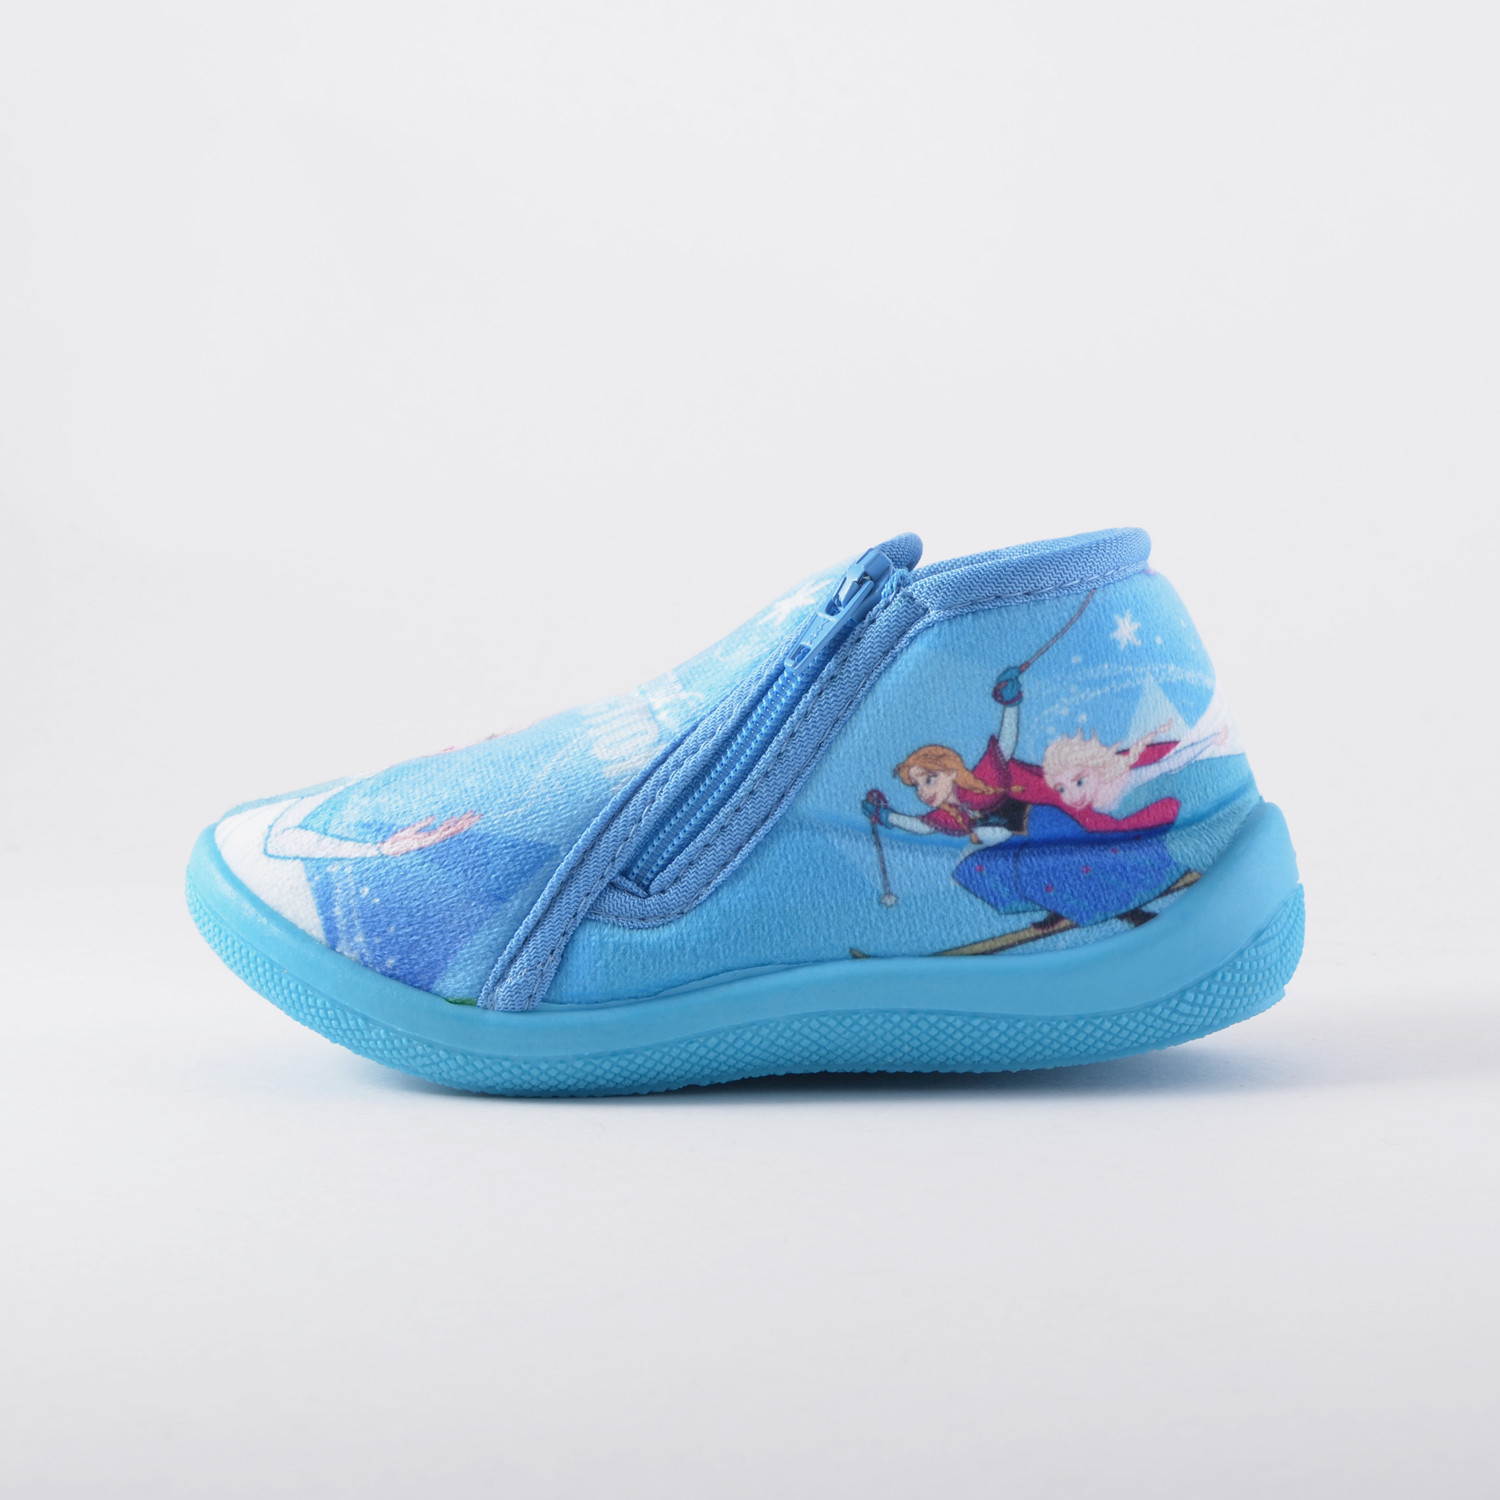 Parex Disney Infants’ Slippers (9000021730_543)